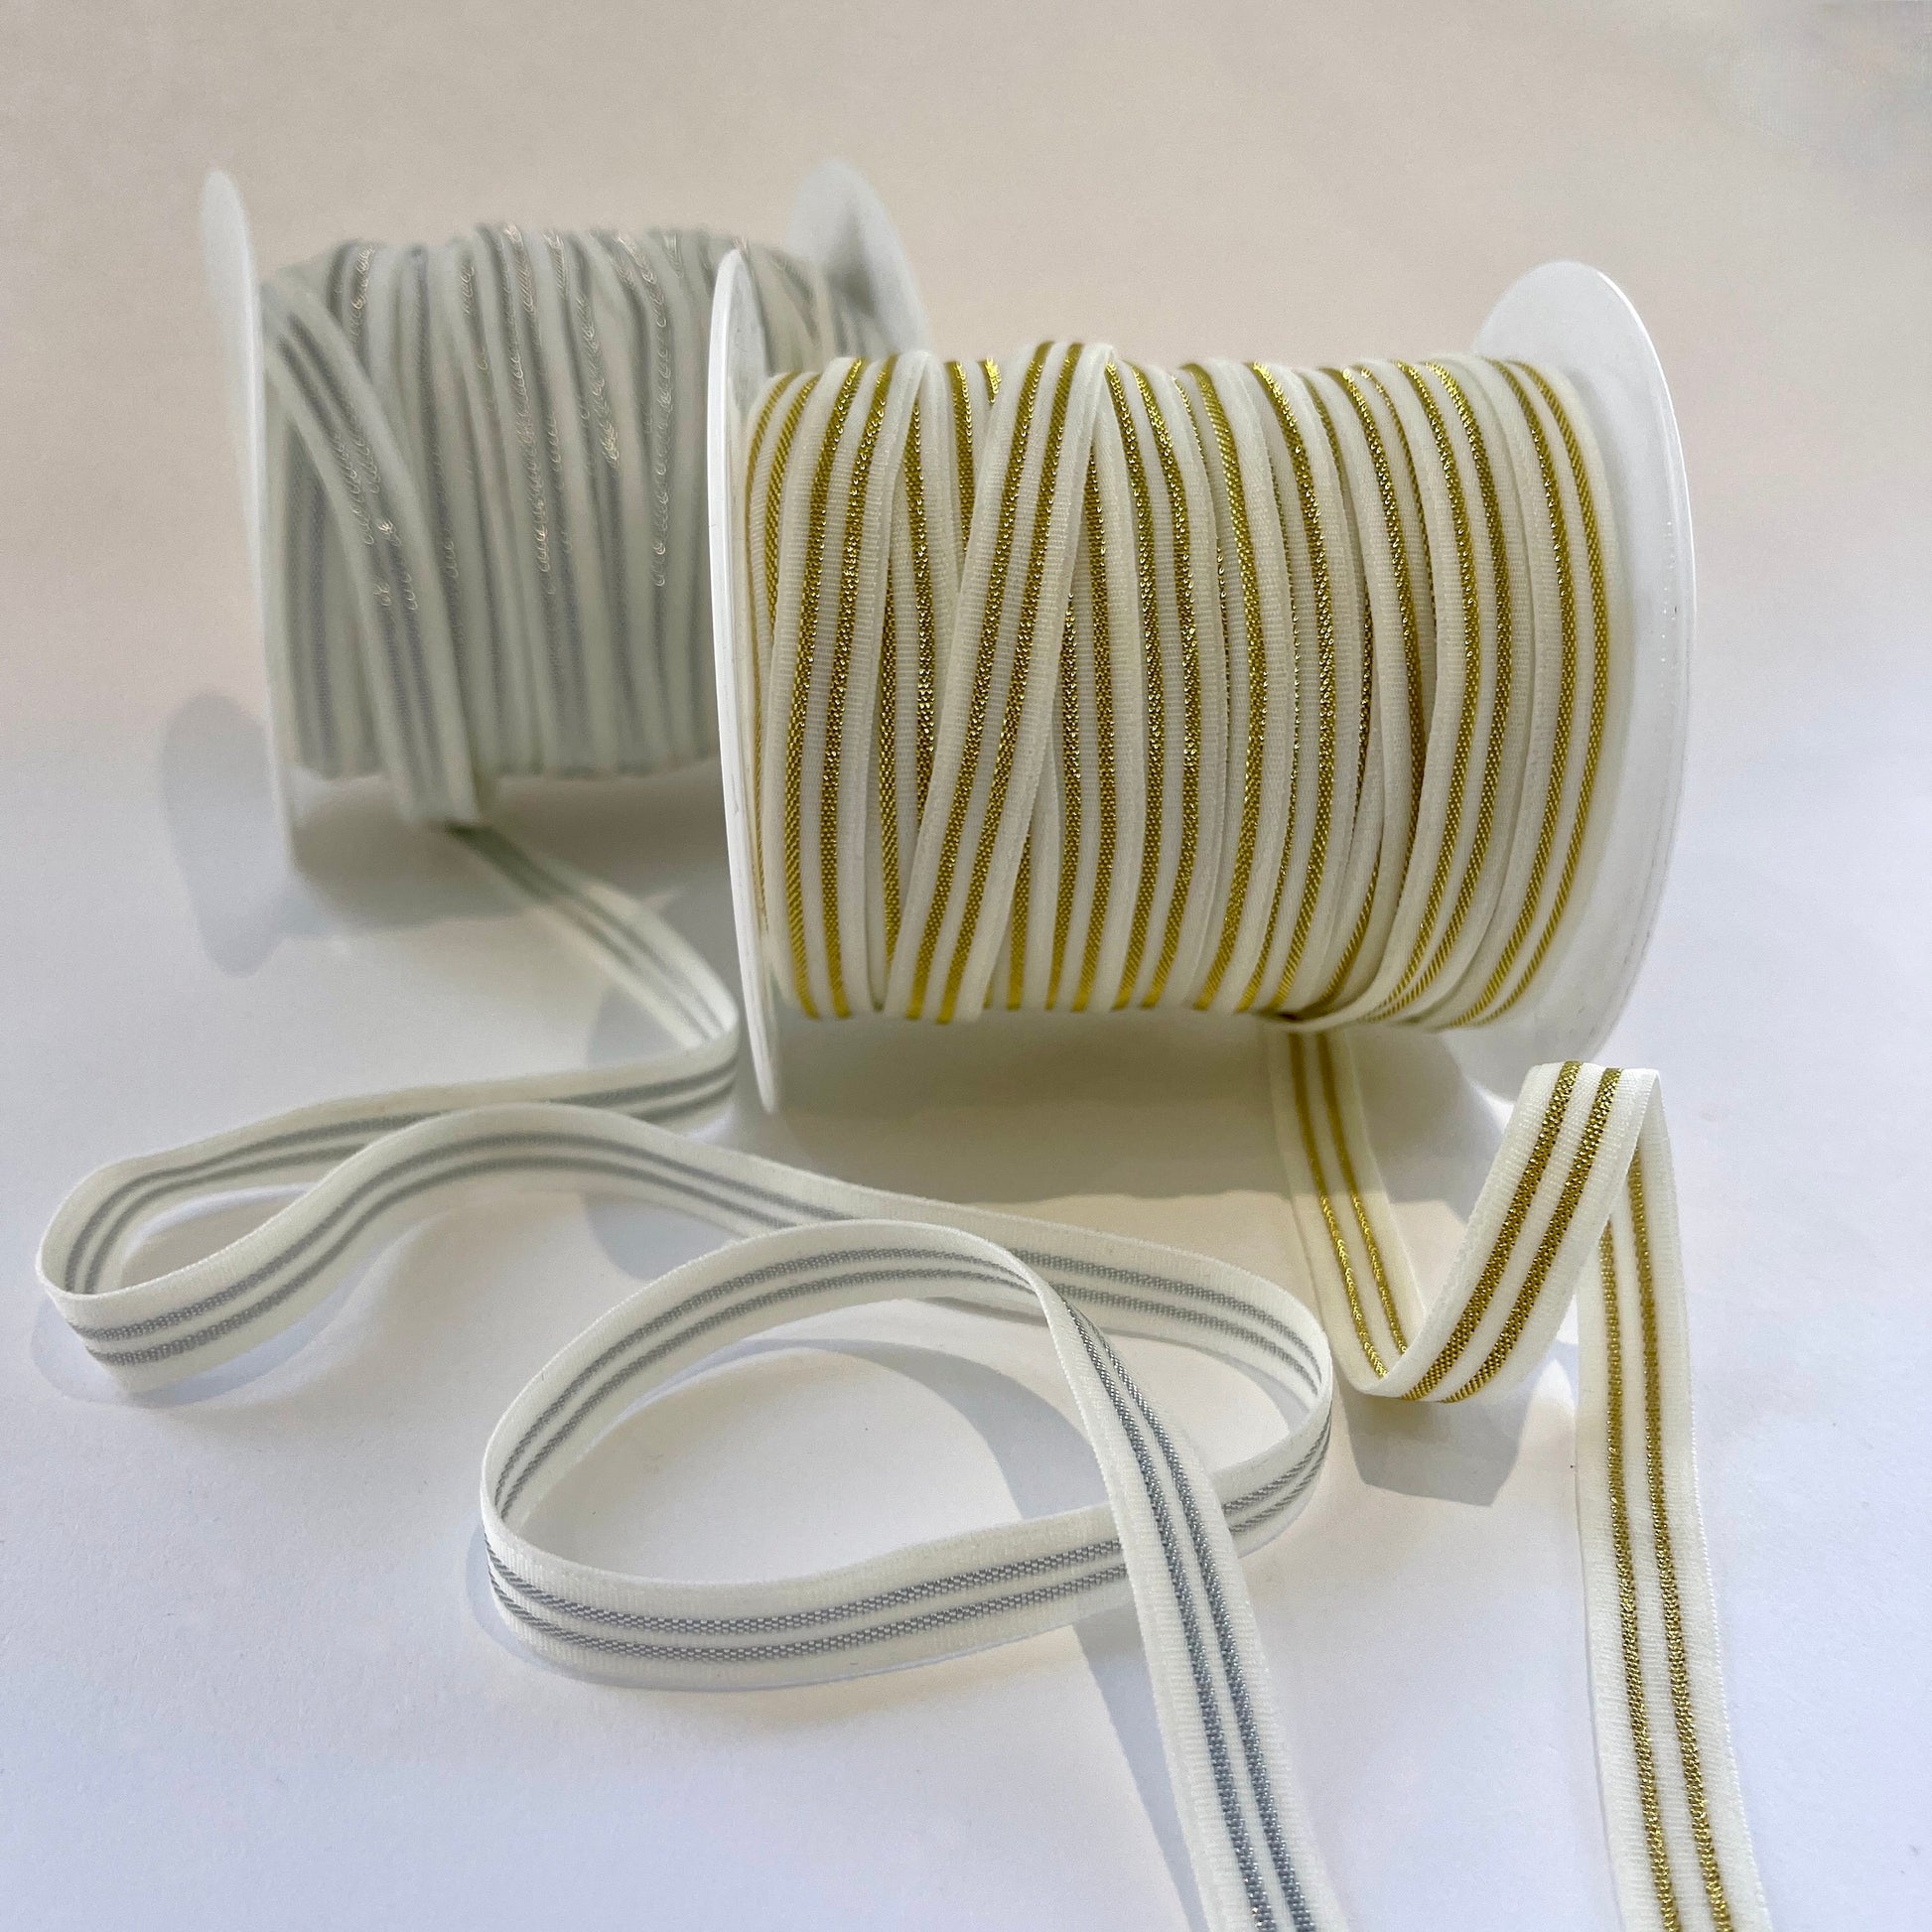 10mm Wide Sporty Stripe Lurex Elastics in gold and silver stripe